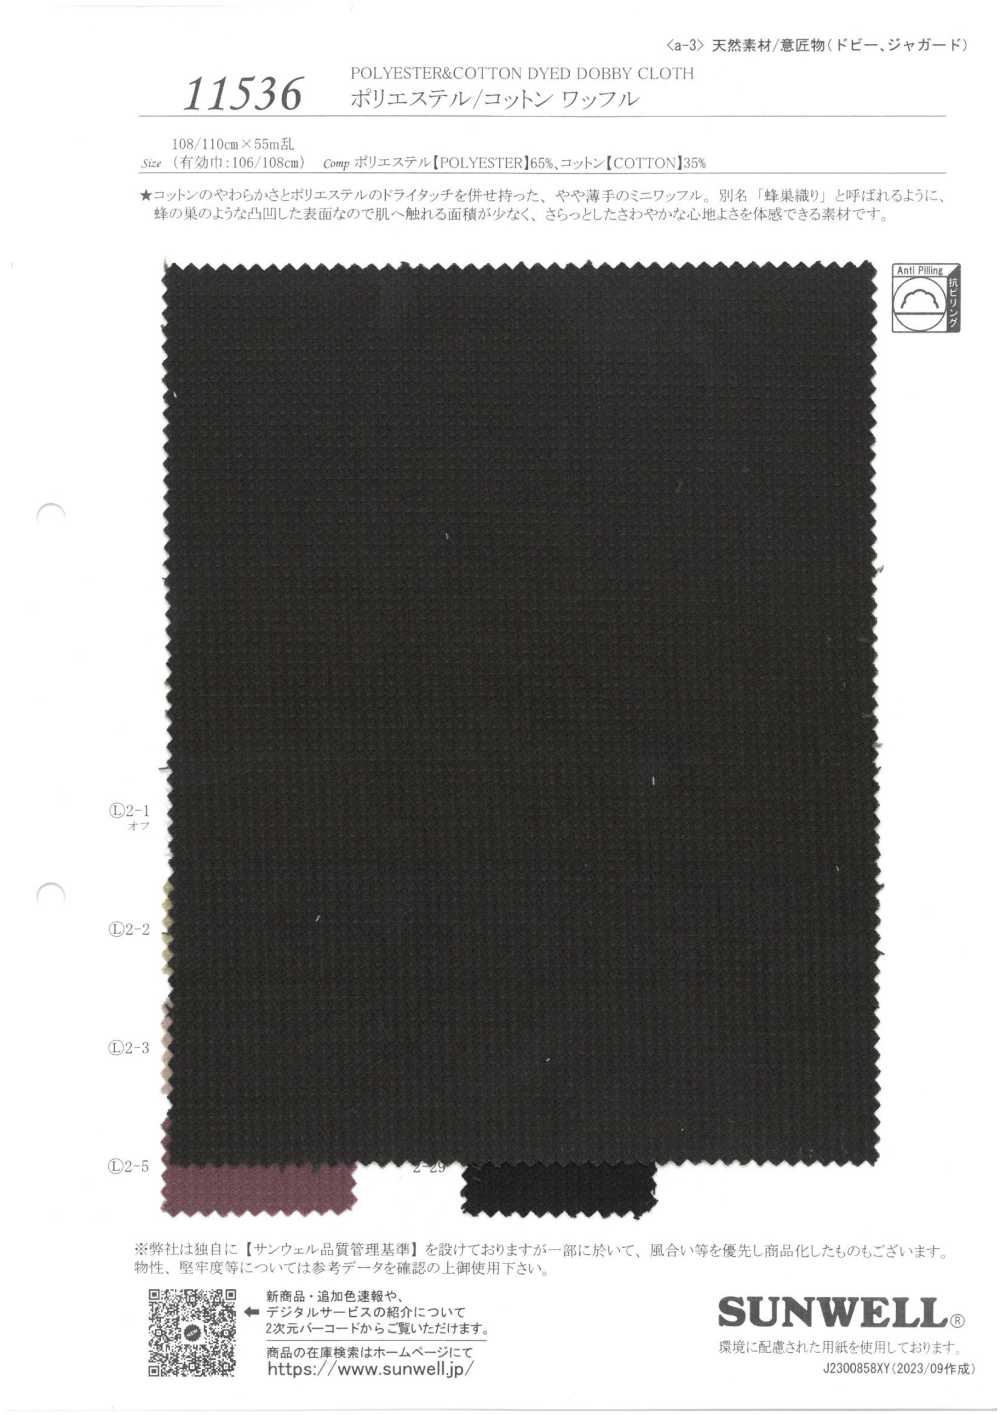 11536 Waffelstrick Aus Polyester/Baumwolle[Textilgewebe] SUNWELL